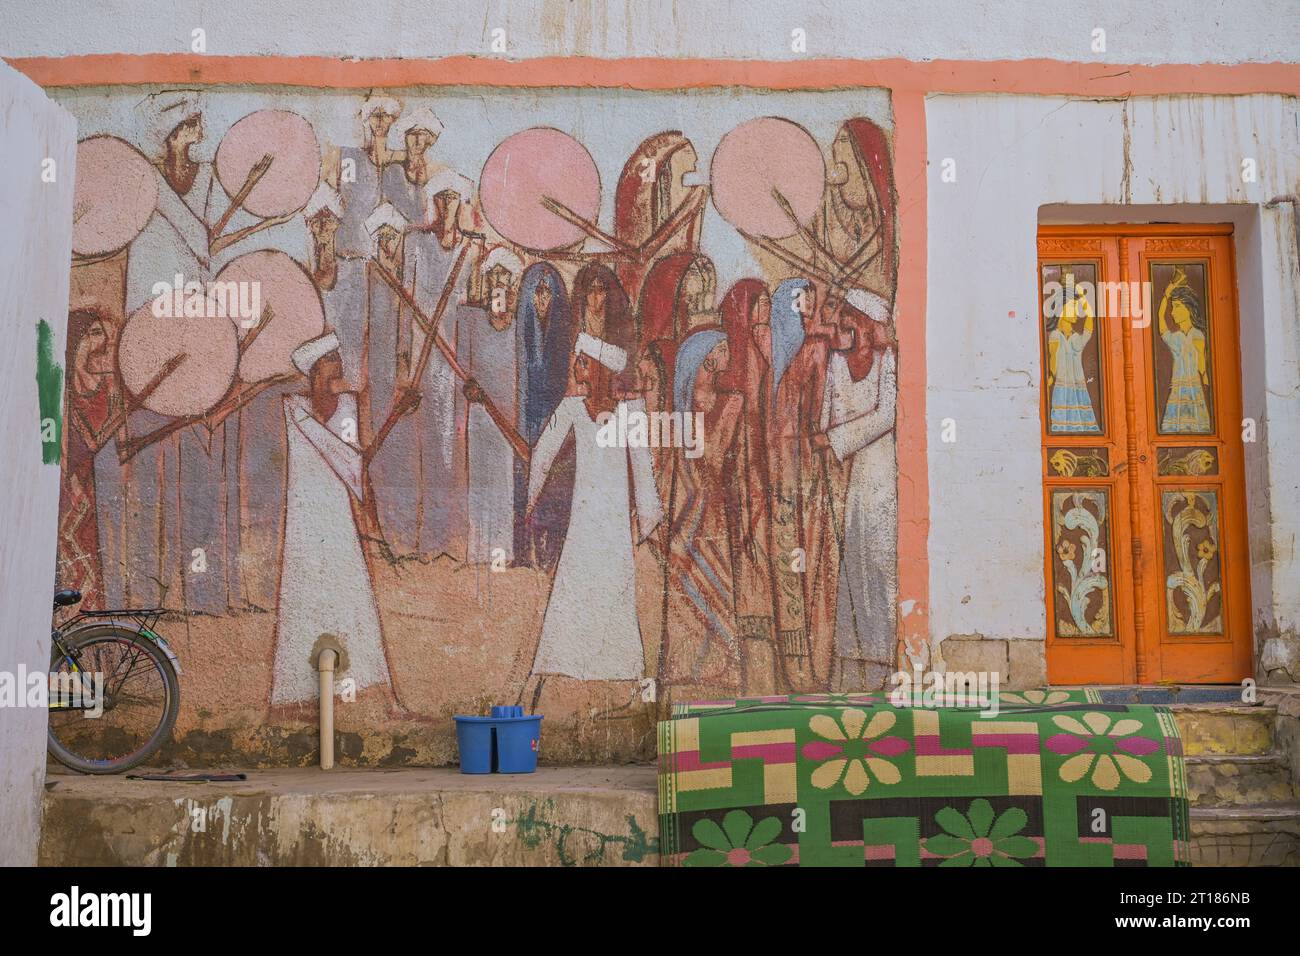 Wandmalerei, Wohnhaus, nubisches Dorf, Nilinsel Elephantine, Assuan, Ägypten Stock Photo